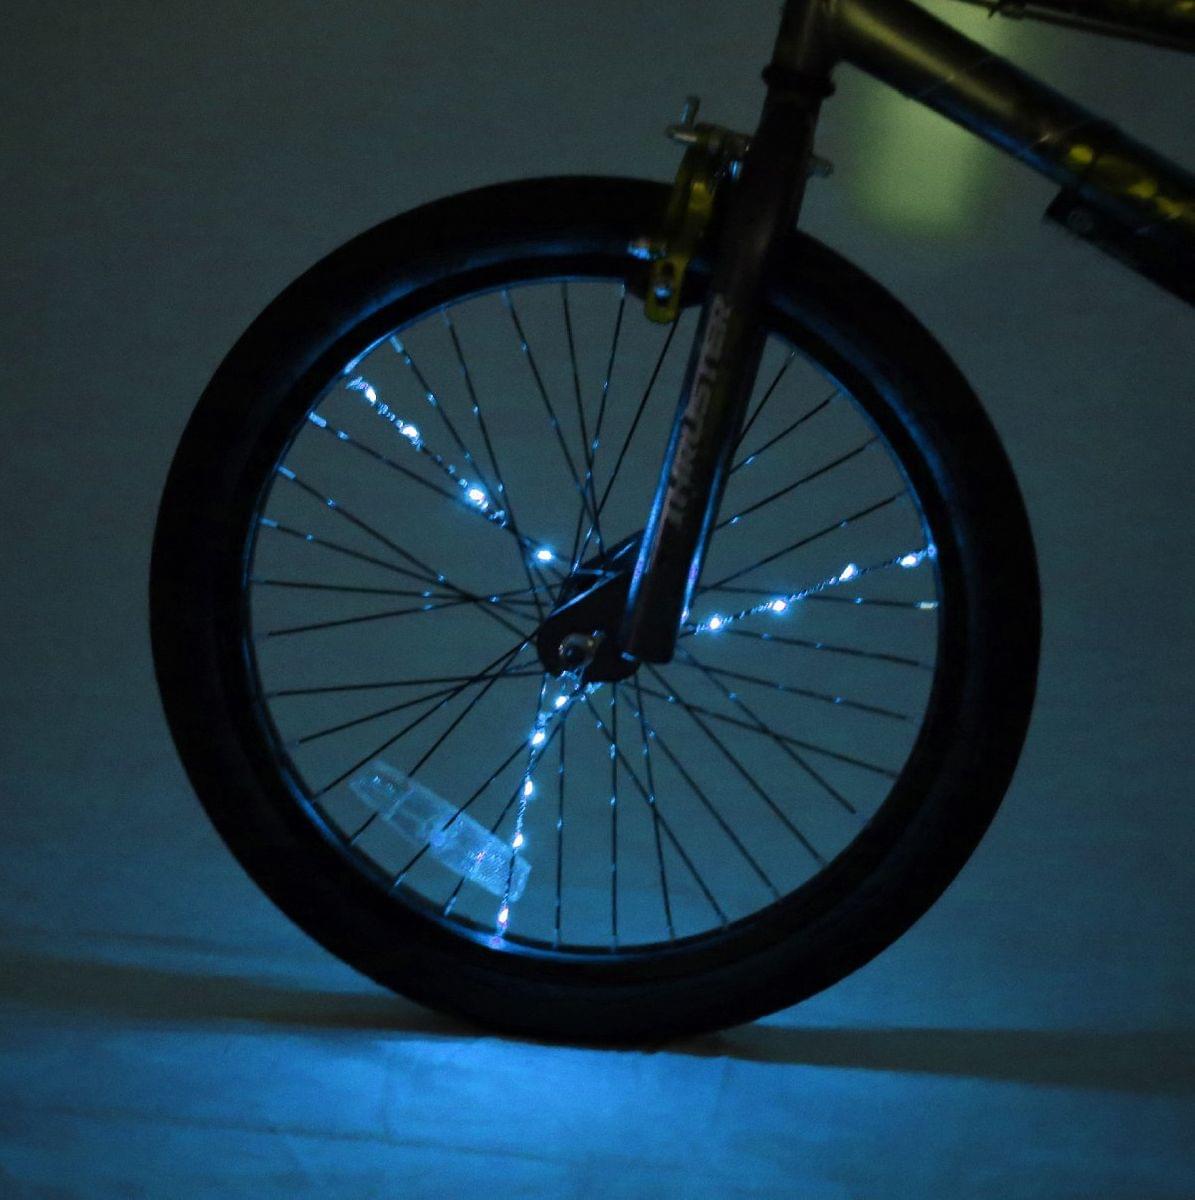 Spoke Brightz LED Bicycle Spoke Accessory, Blue